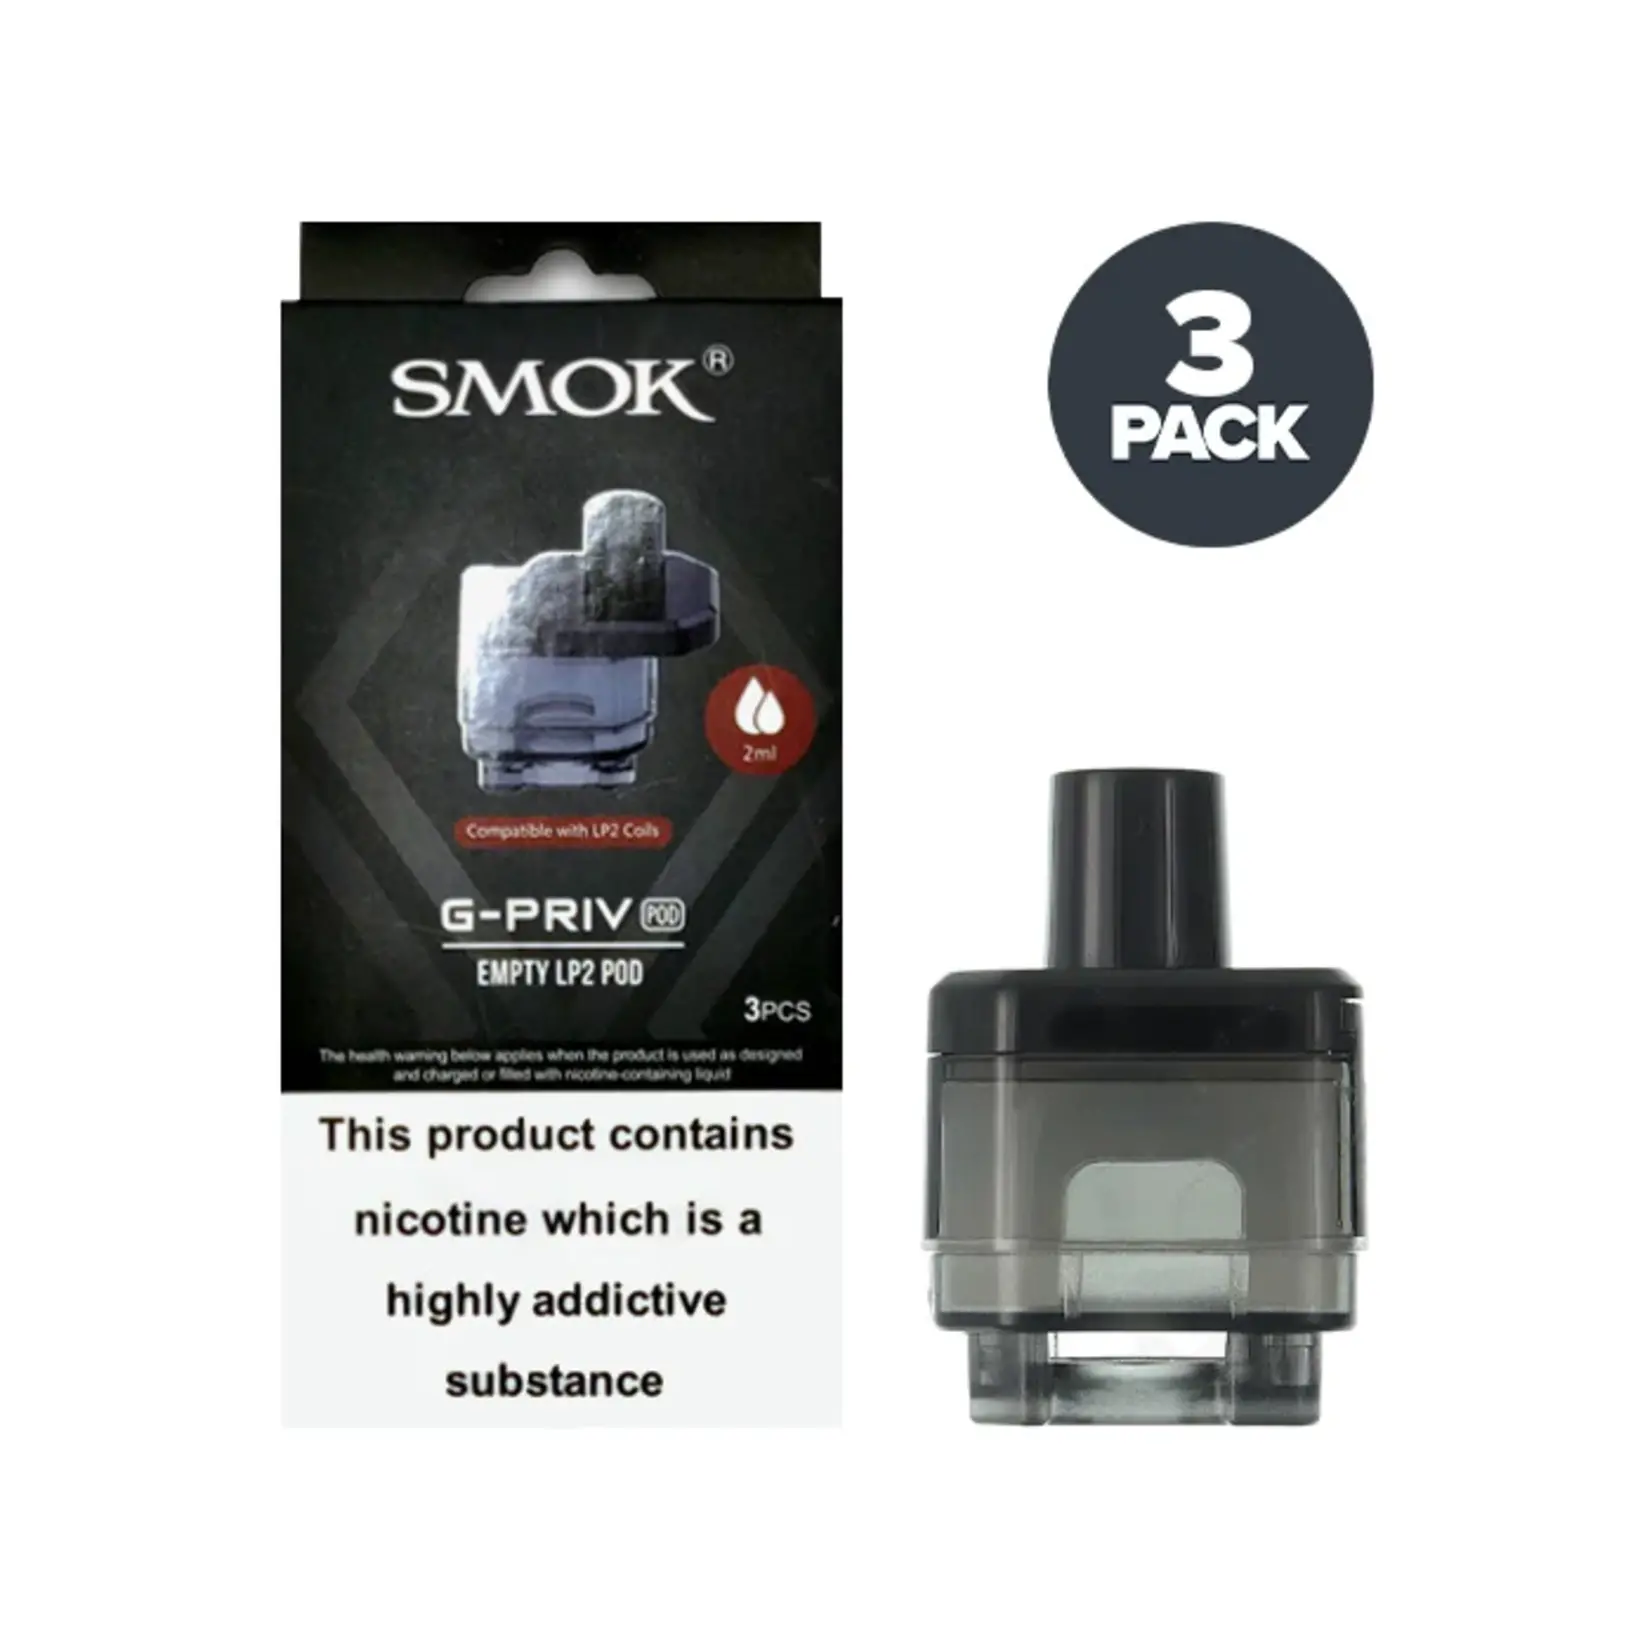 Smok G-Priv Empty LP2 Pod (3 Pack)